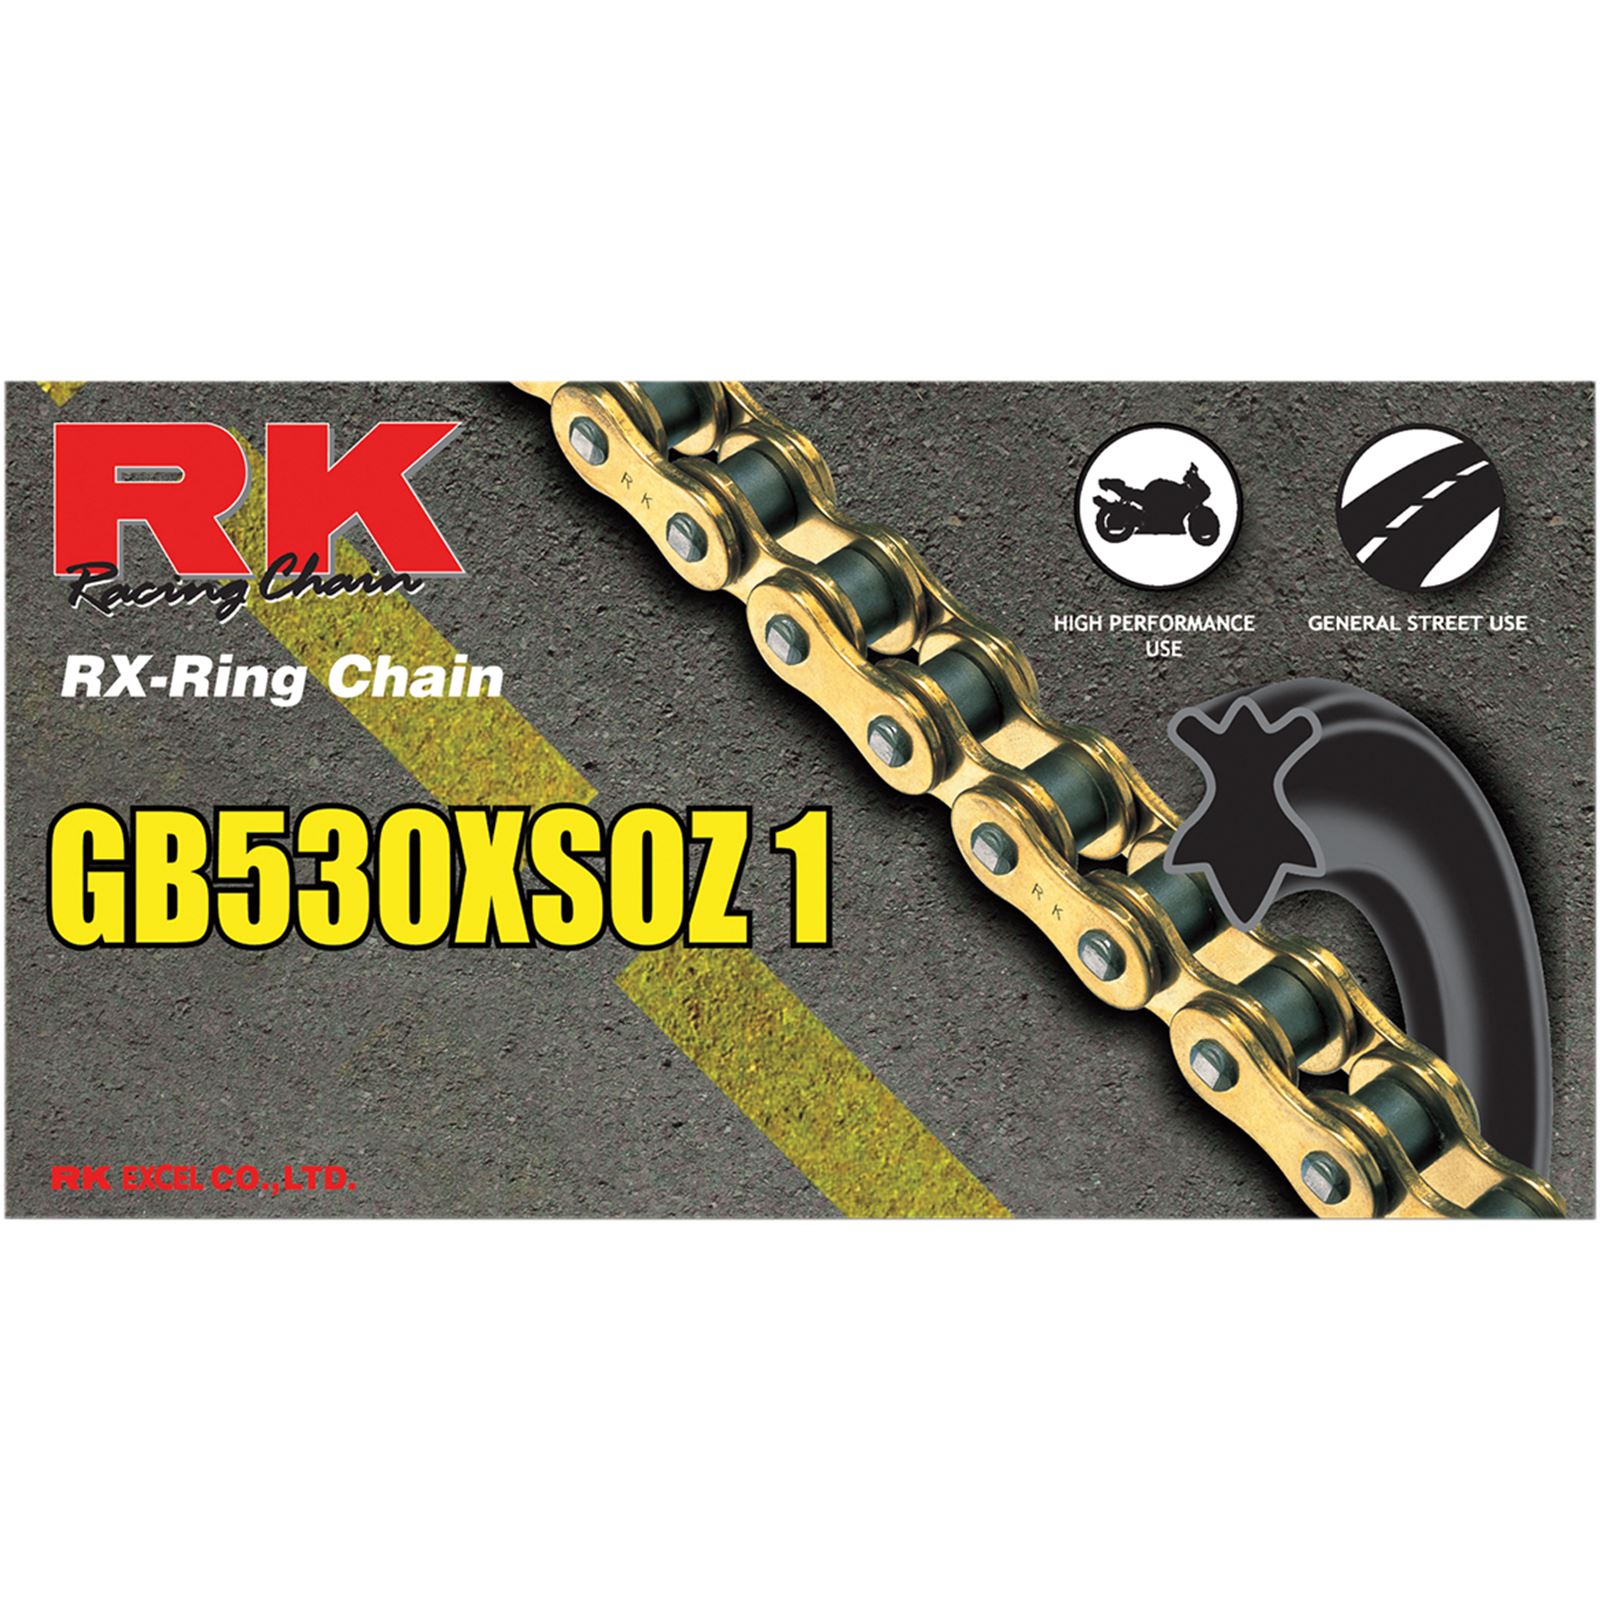 RK Excel 530 XSOZ1 - Chain - 110 Links